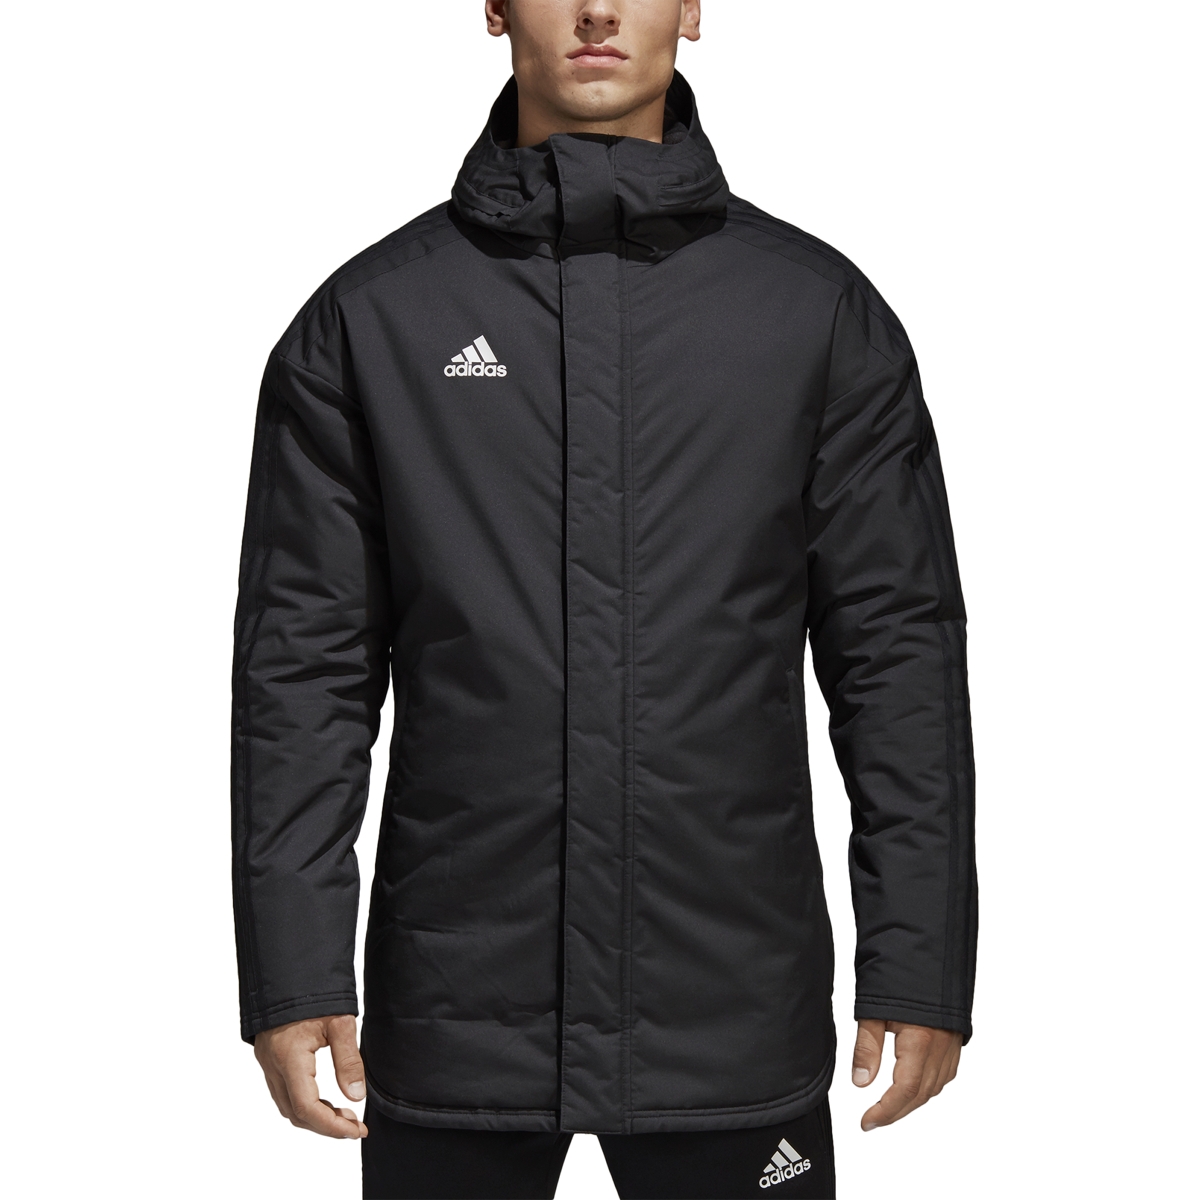 Adidas Jacket 18 Stadium Parka - Soccer 